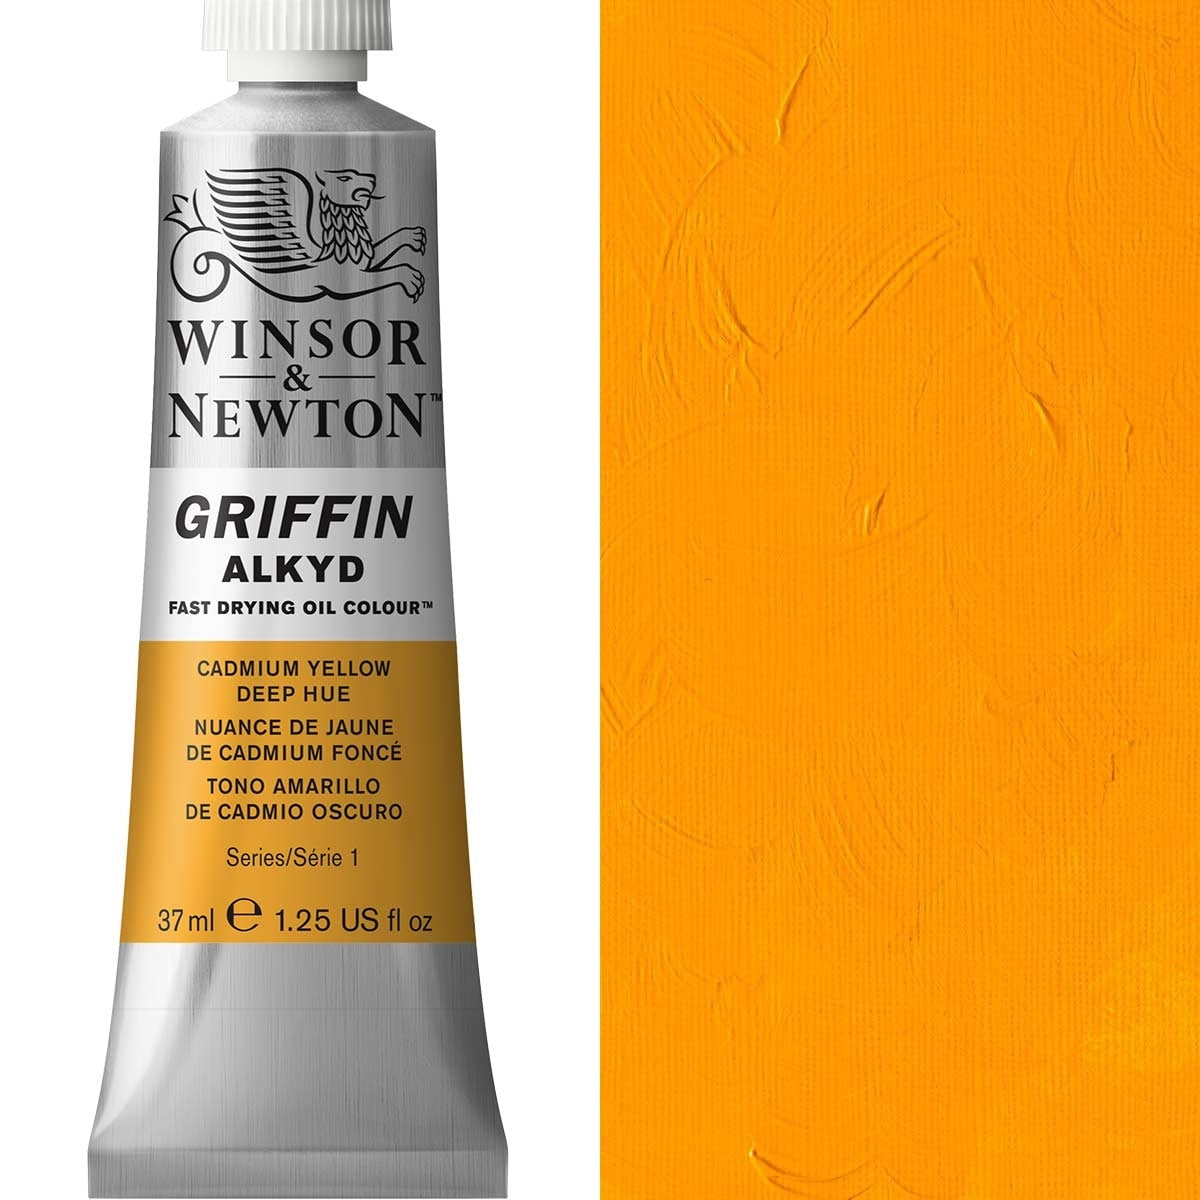 Winsor et Newton - Griffin Alkyd Huile Couleur - 37 ml - Cadmium jaune profonde